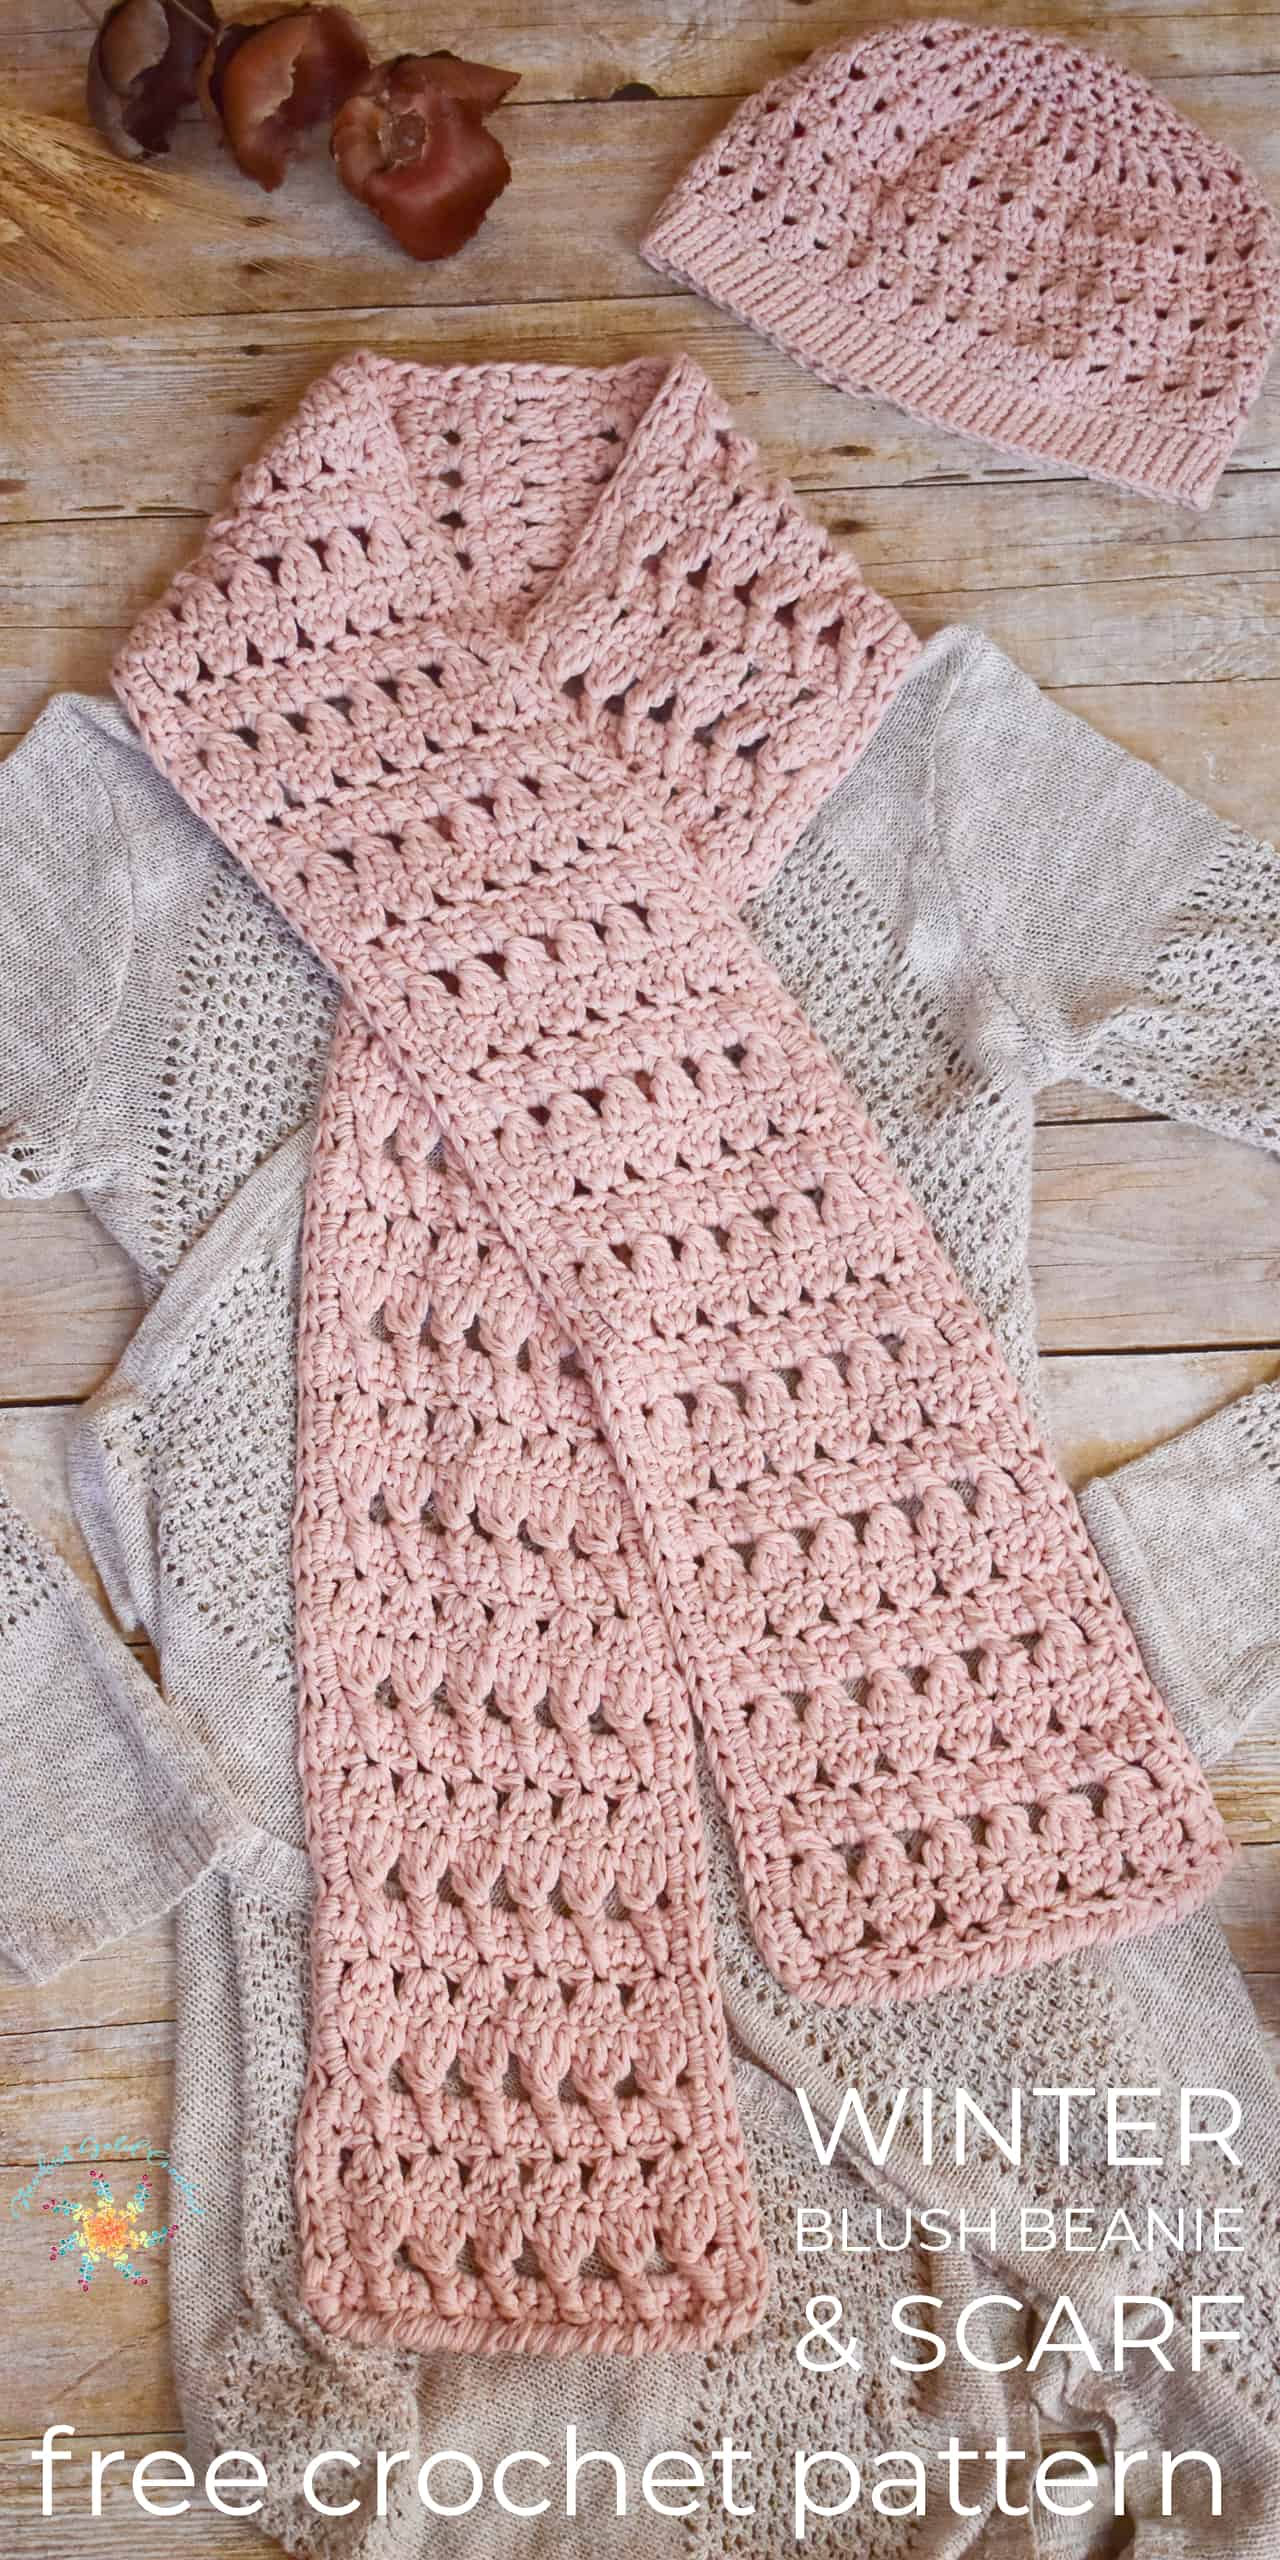 crochet winter hat pattern winter blush beanie and scarf pin